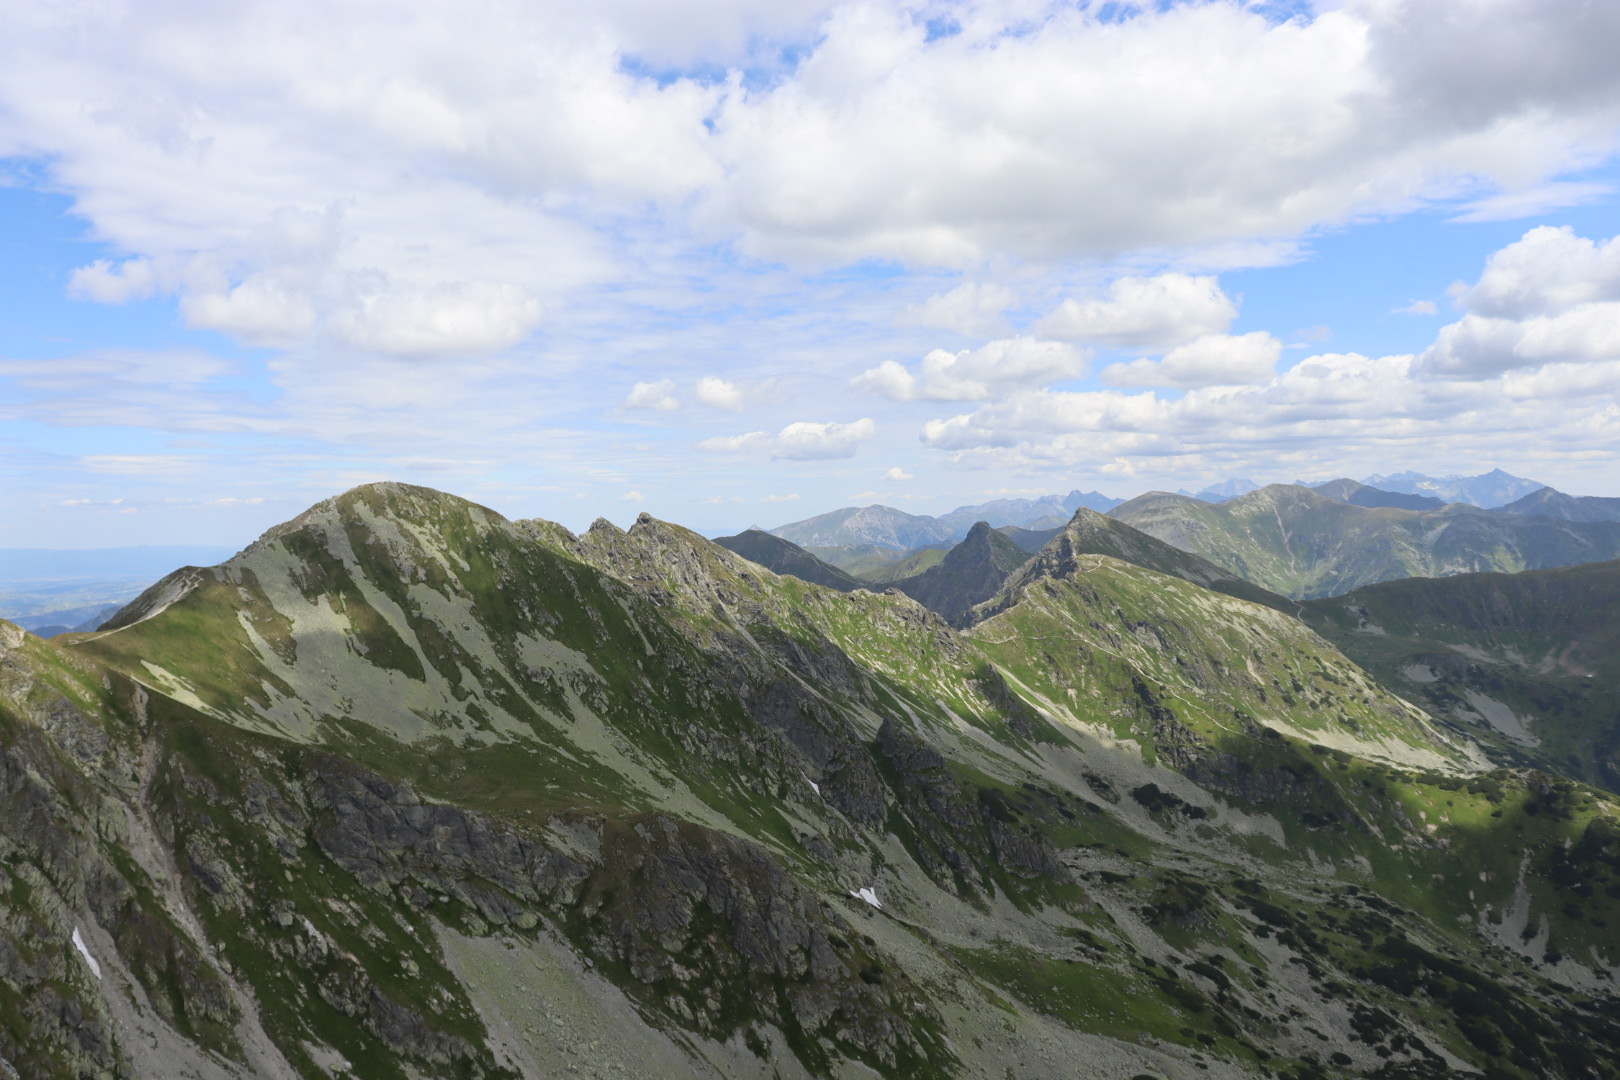 The ascent, view towards the High Tatras mountain range